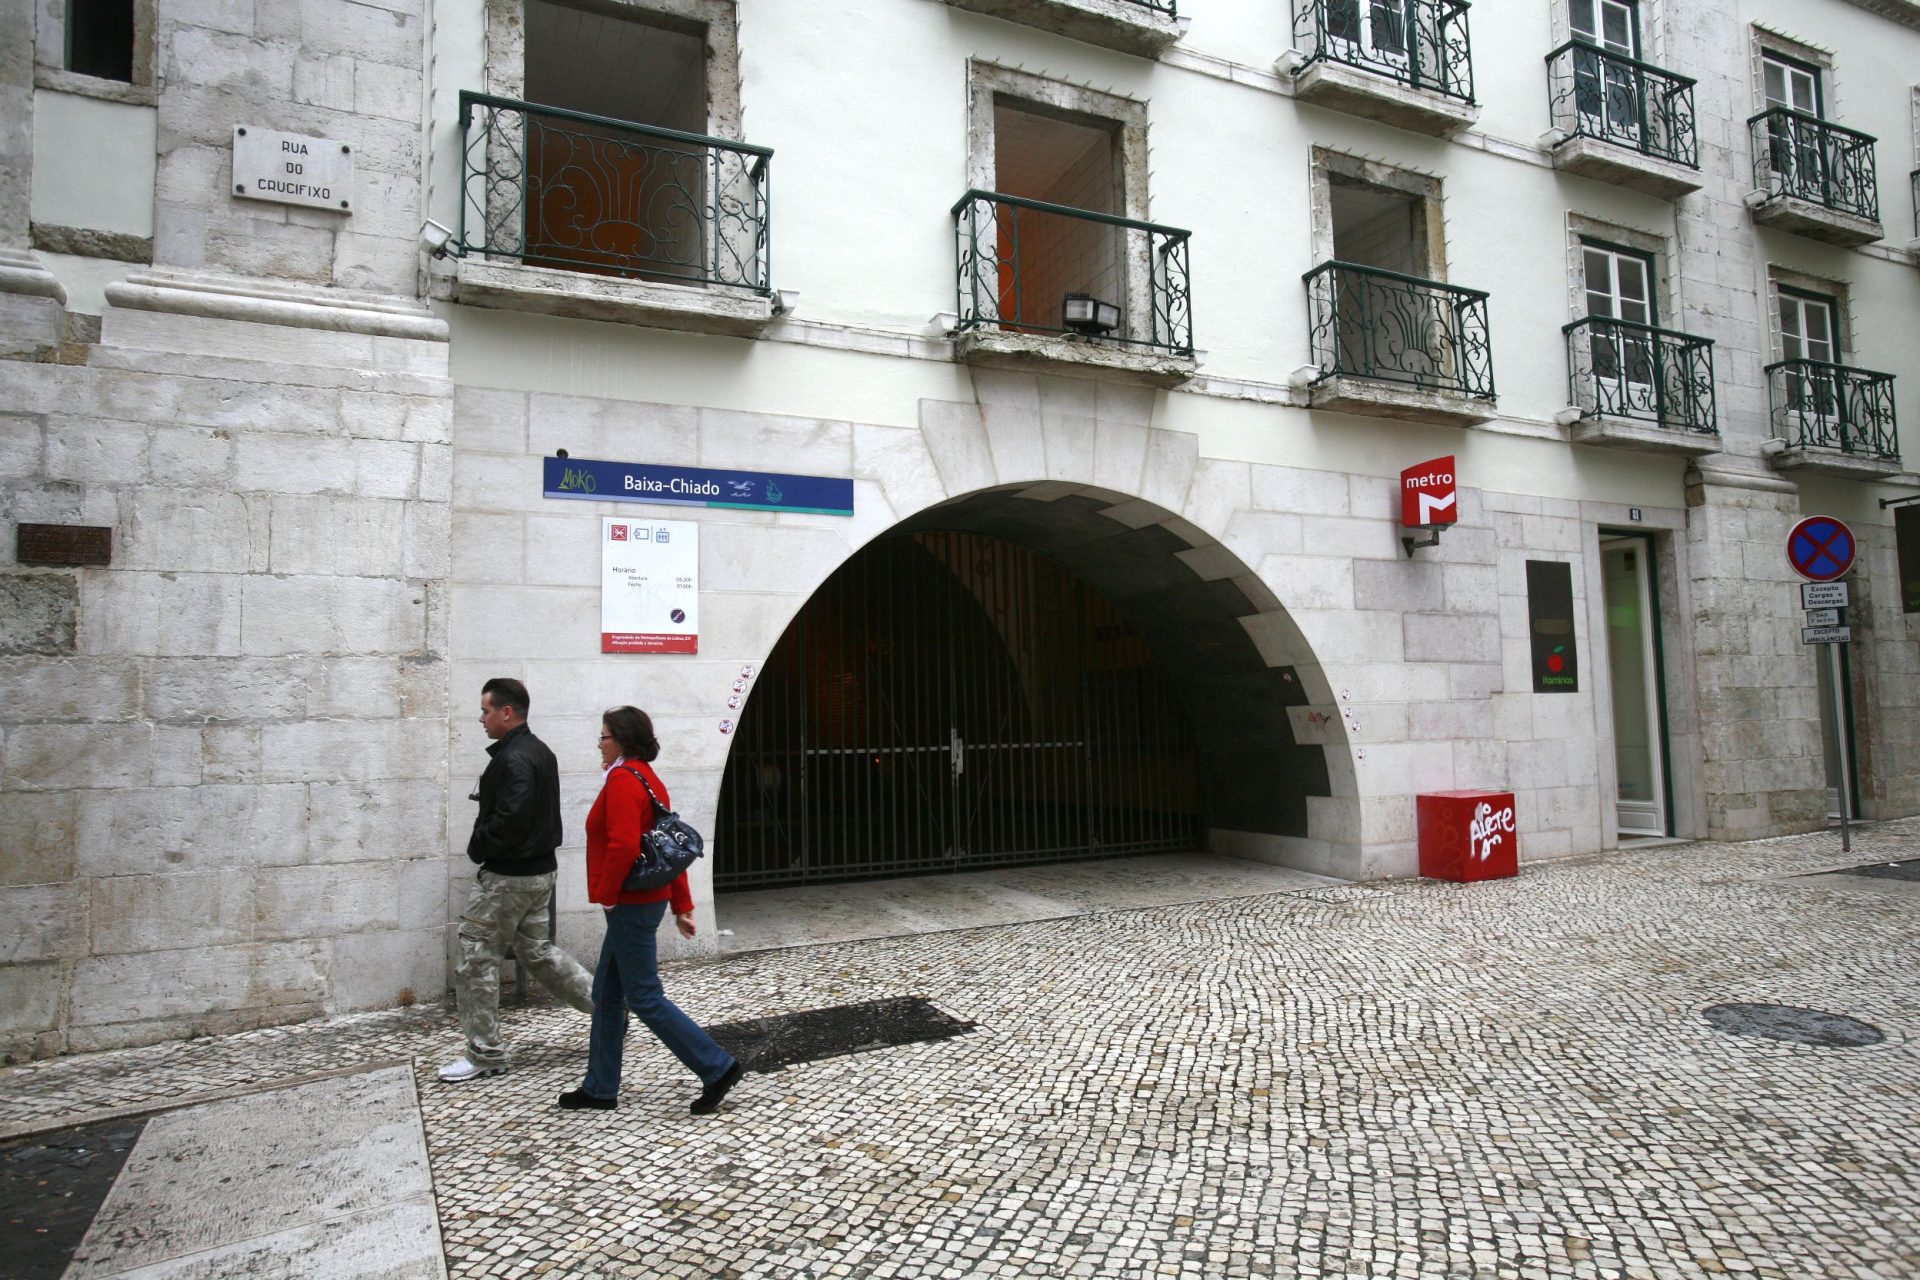 Lisboa. Dois carteiristas ficam proibidos de frequentar a Baixa-Chiado